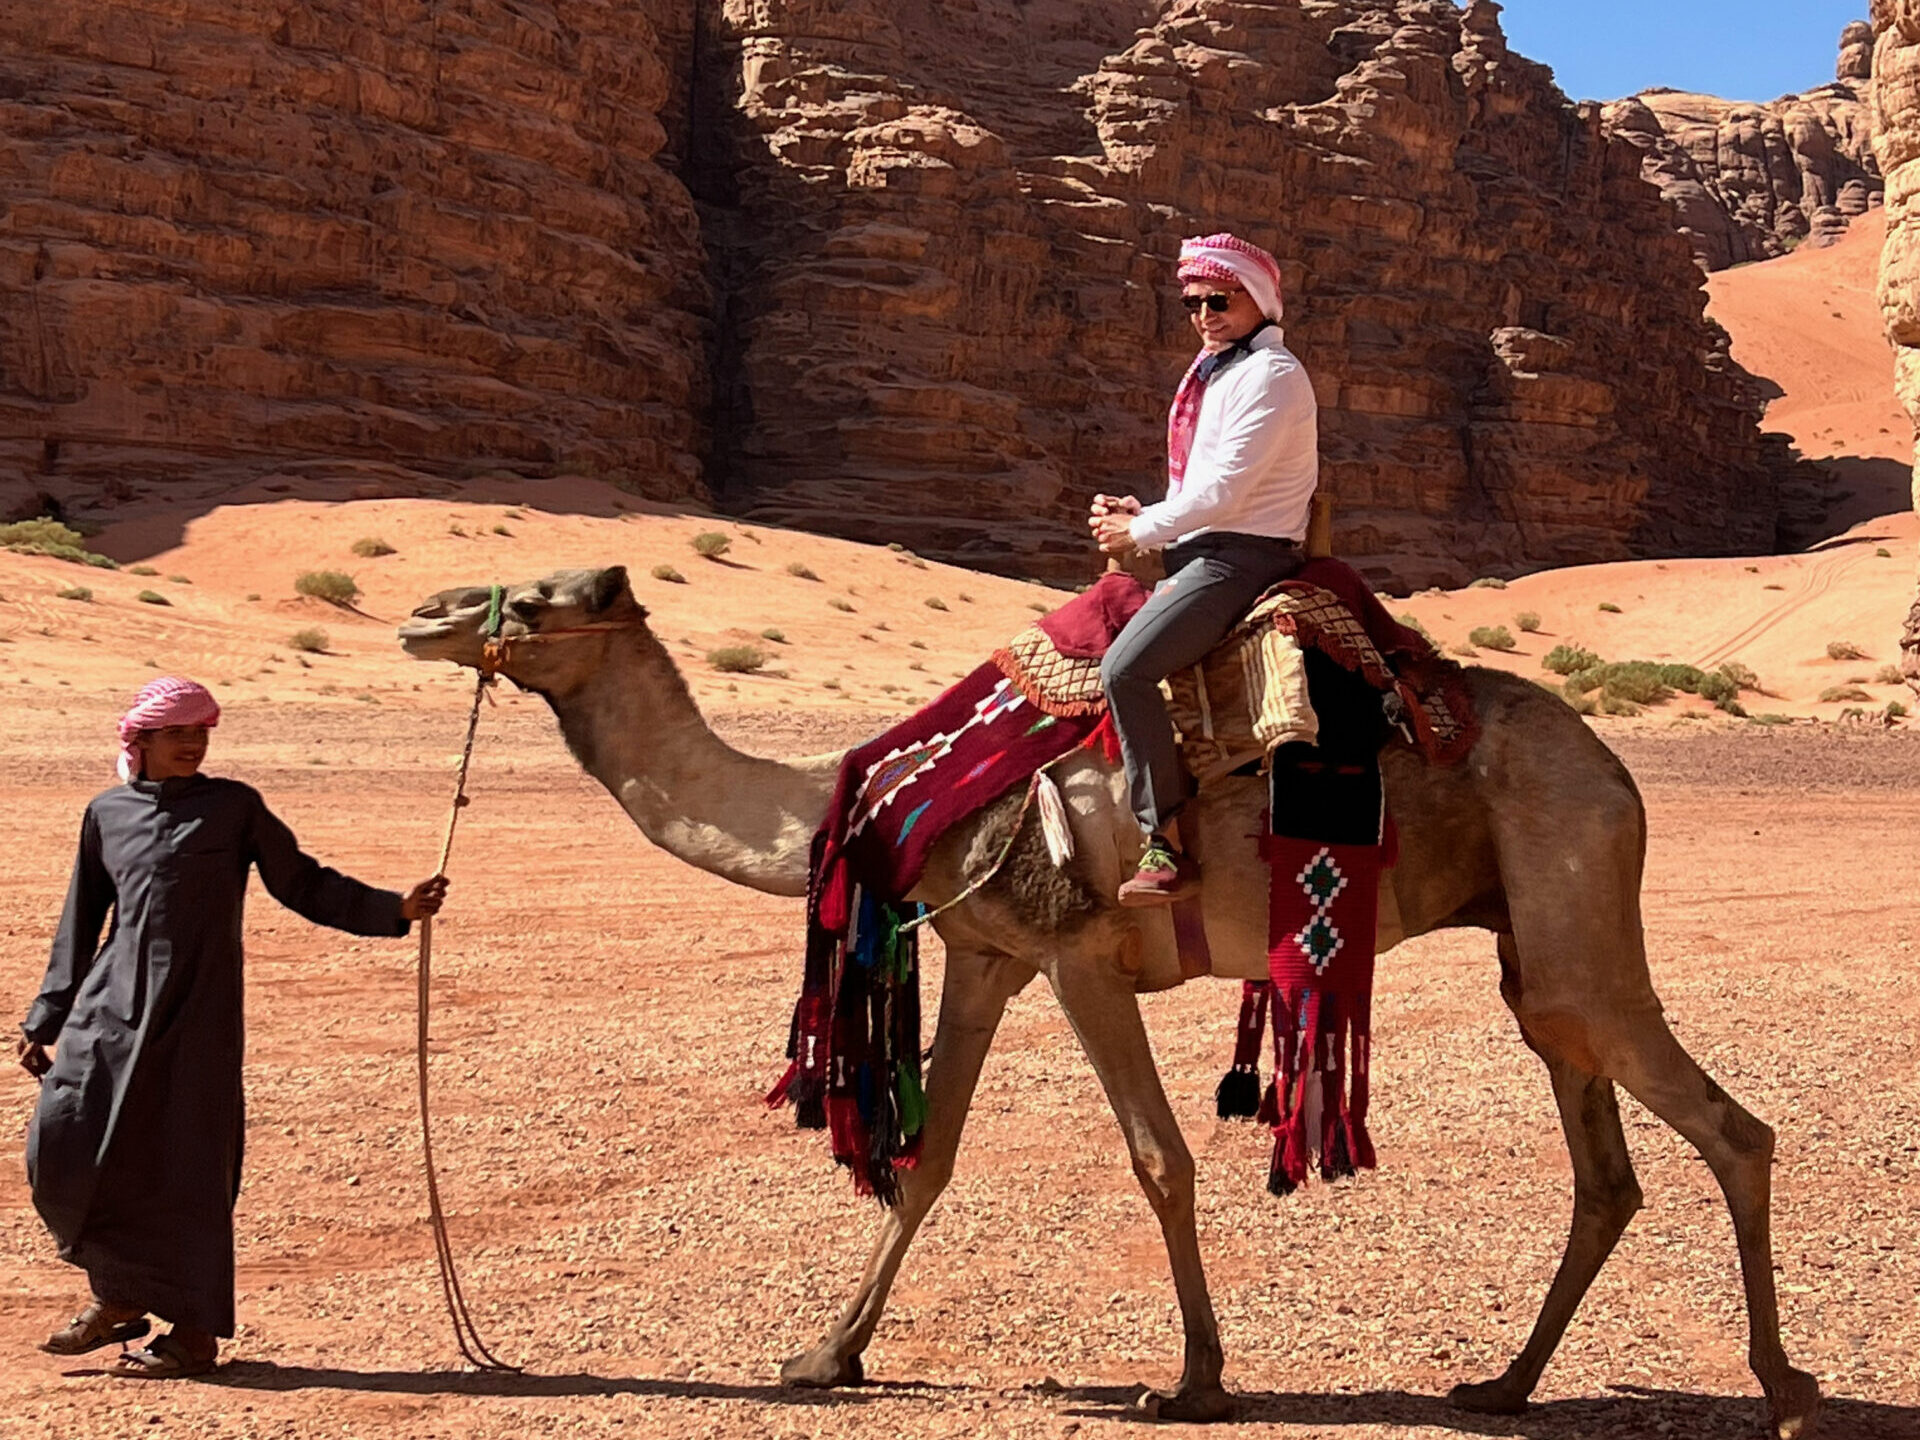 Massimo President & CEO of MT Sobek riding a camel in Saudi Arabia